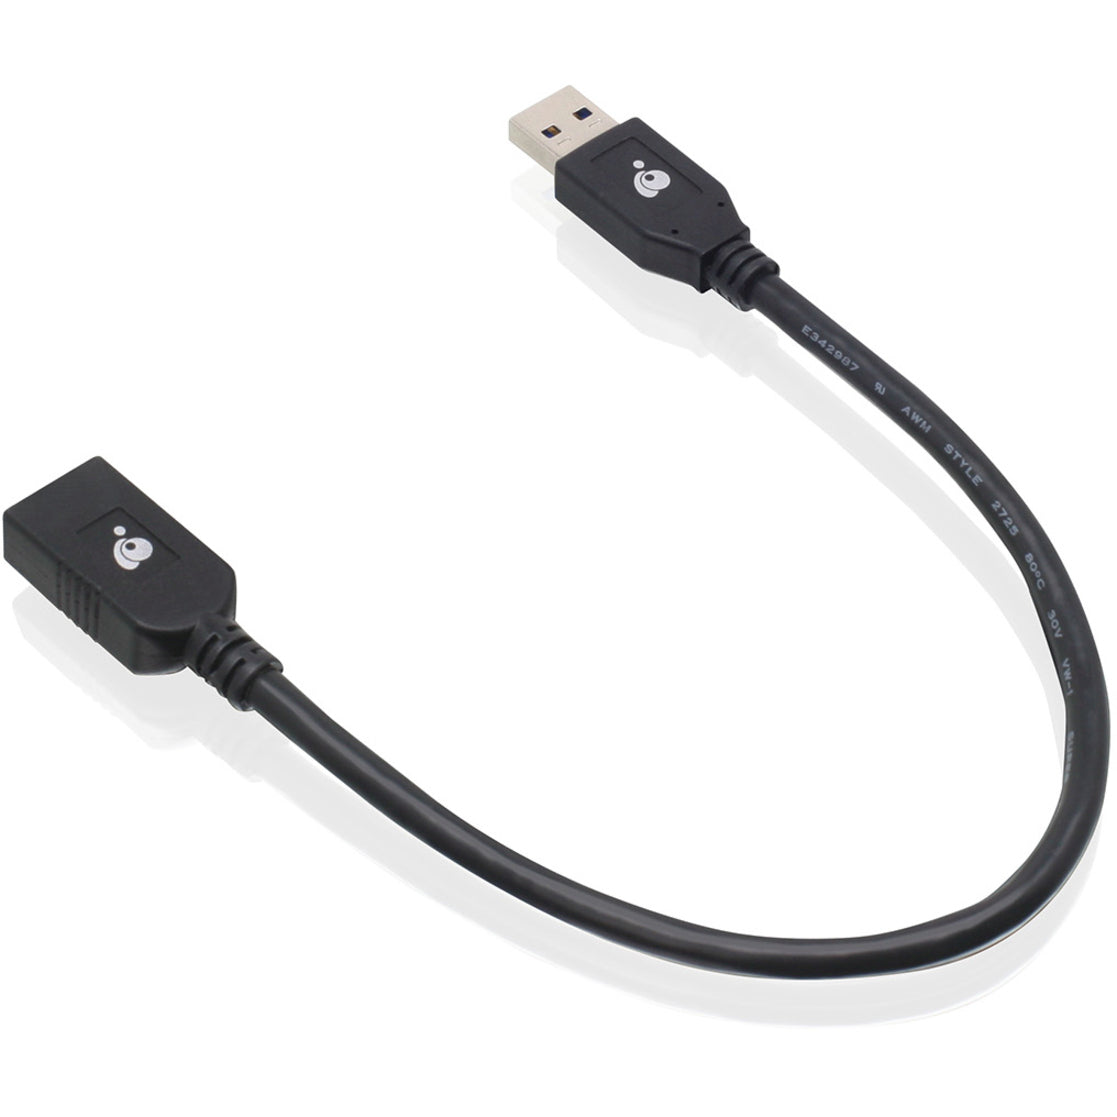 Cable de extensión USB 3.0 IOGEAR G2LU3AMF Macho a Hembra 12 pulgadas Velocidad de transferencia de datos de 5 Gbit/s